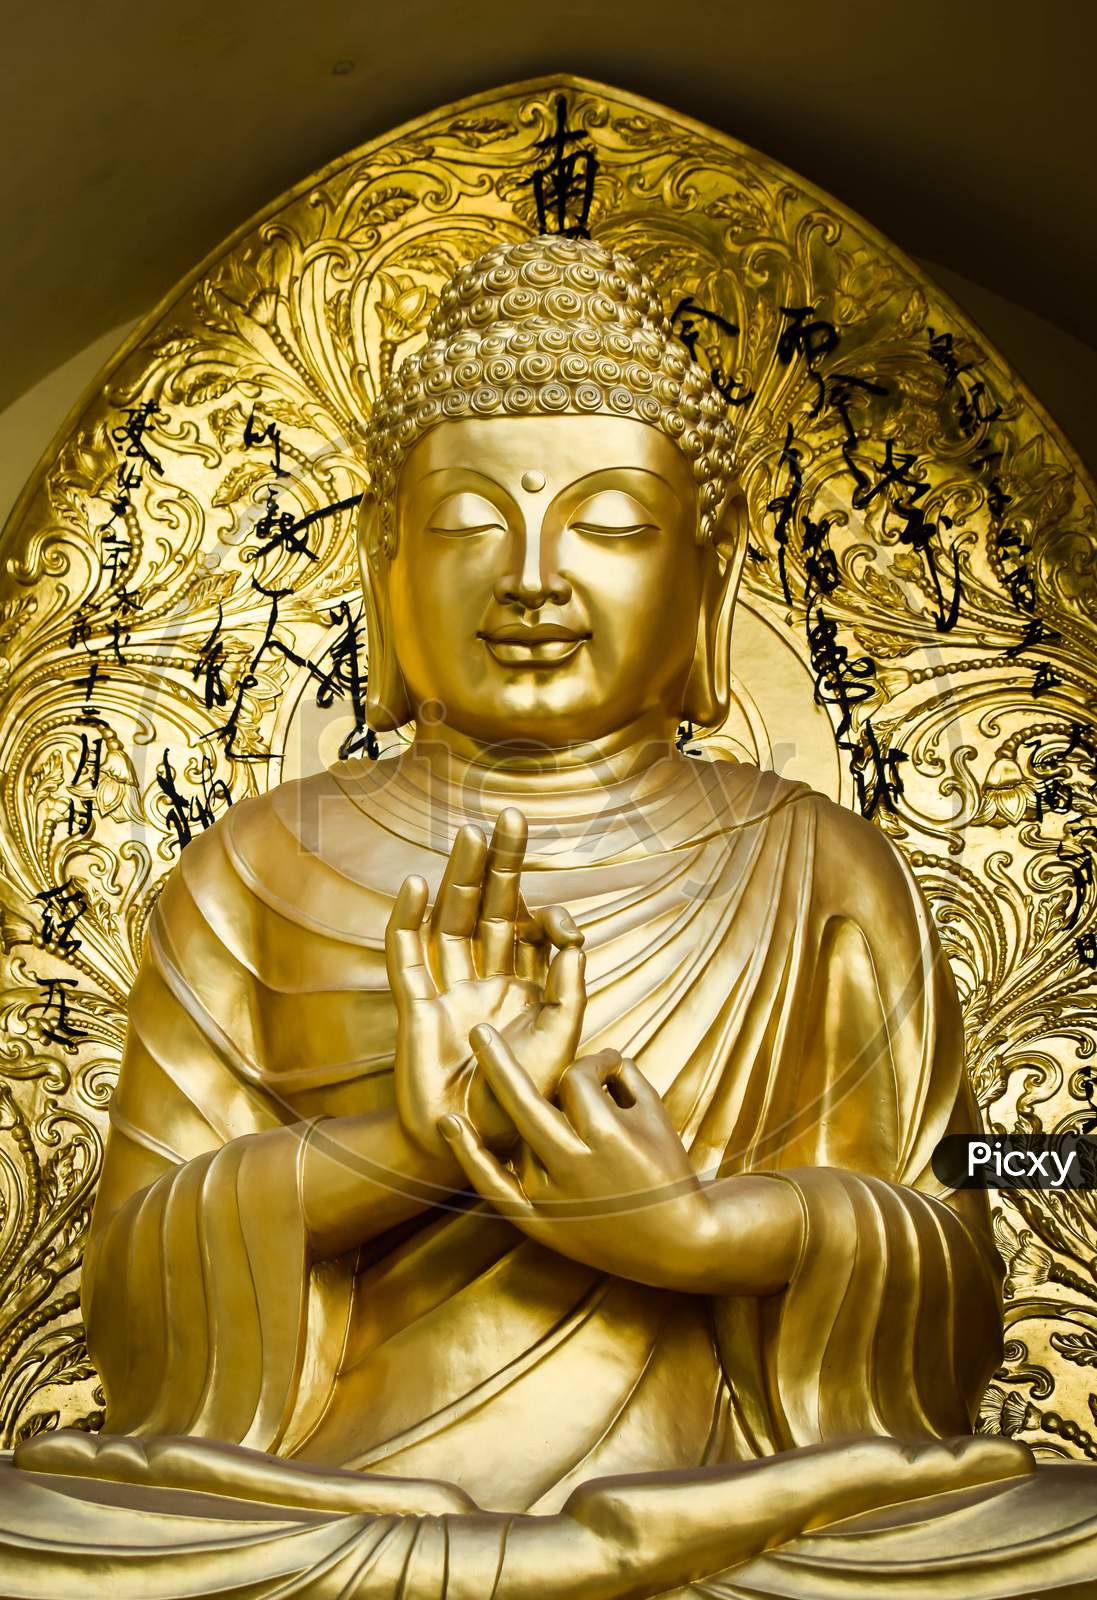 Lord Buddha, Gautam Buddha statue